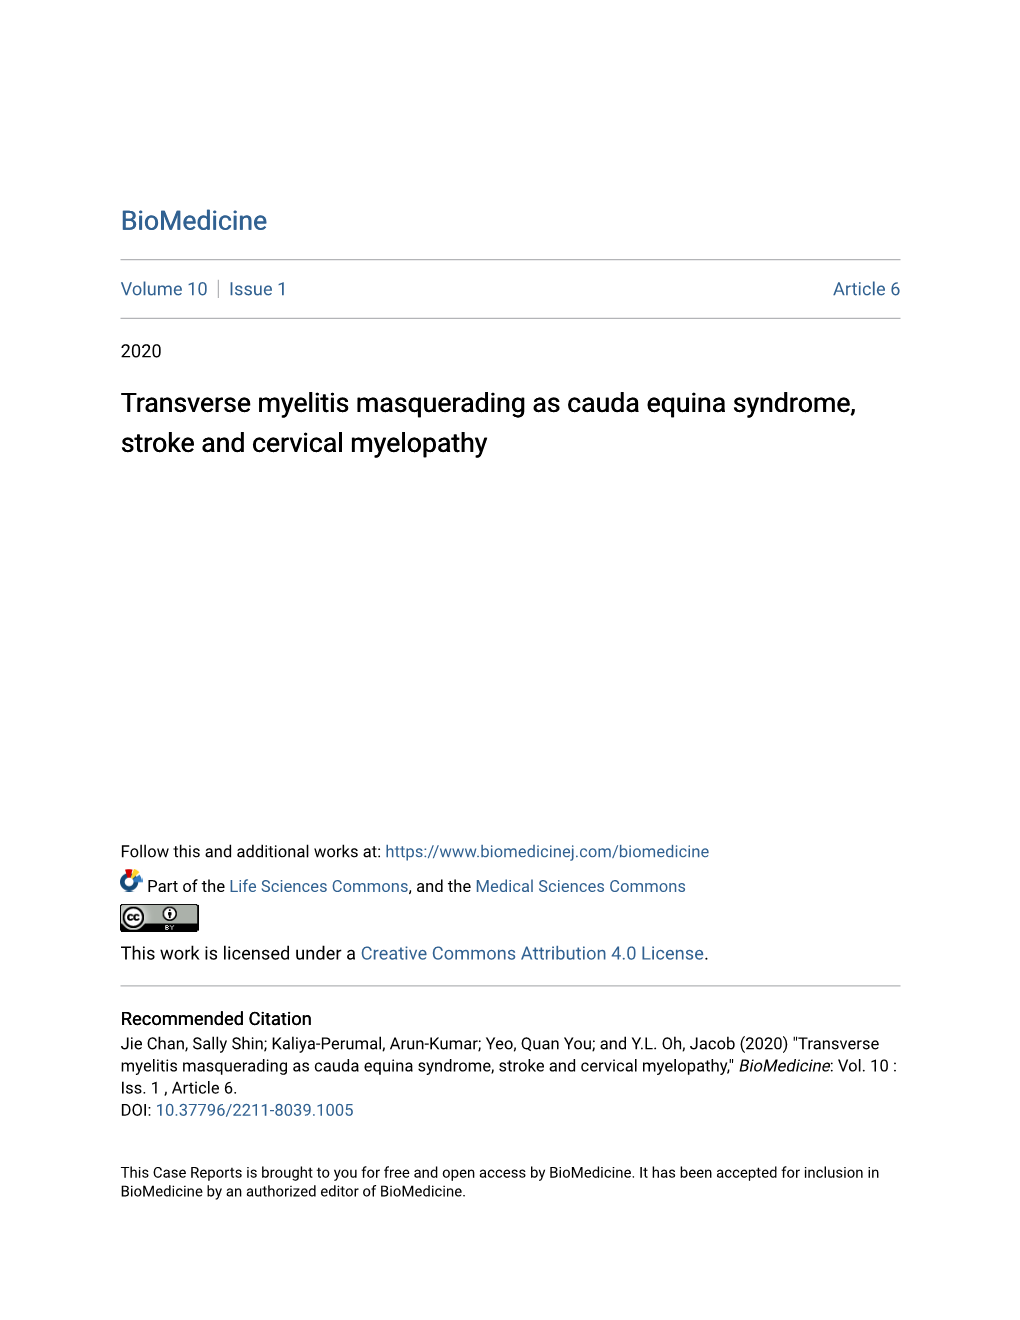 Transverse Myelitis Masquerading As Cauda Equina Syndrome, Stroke and Cervical Myelopathy